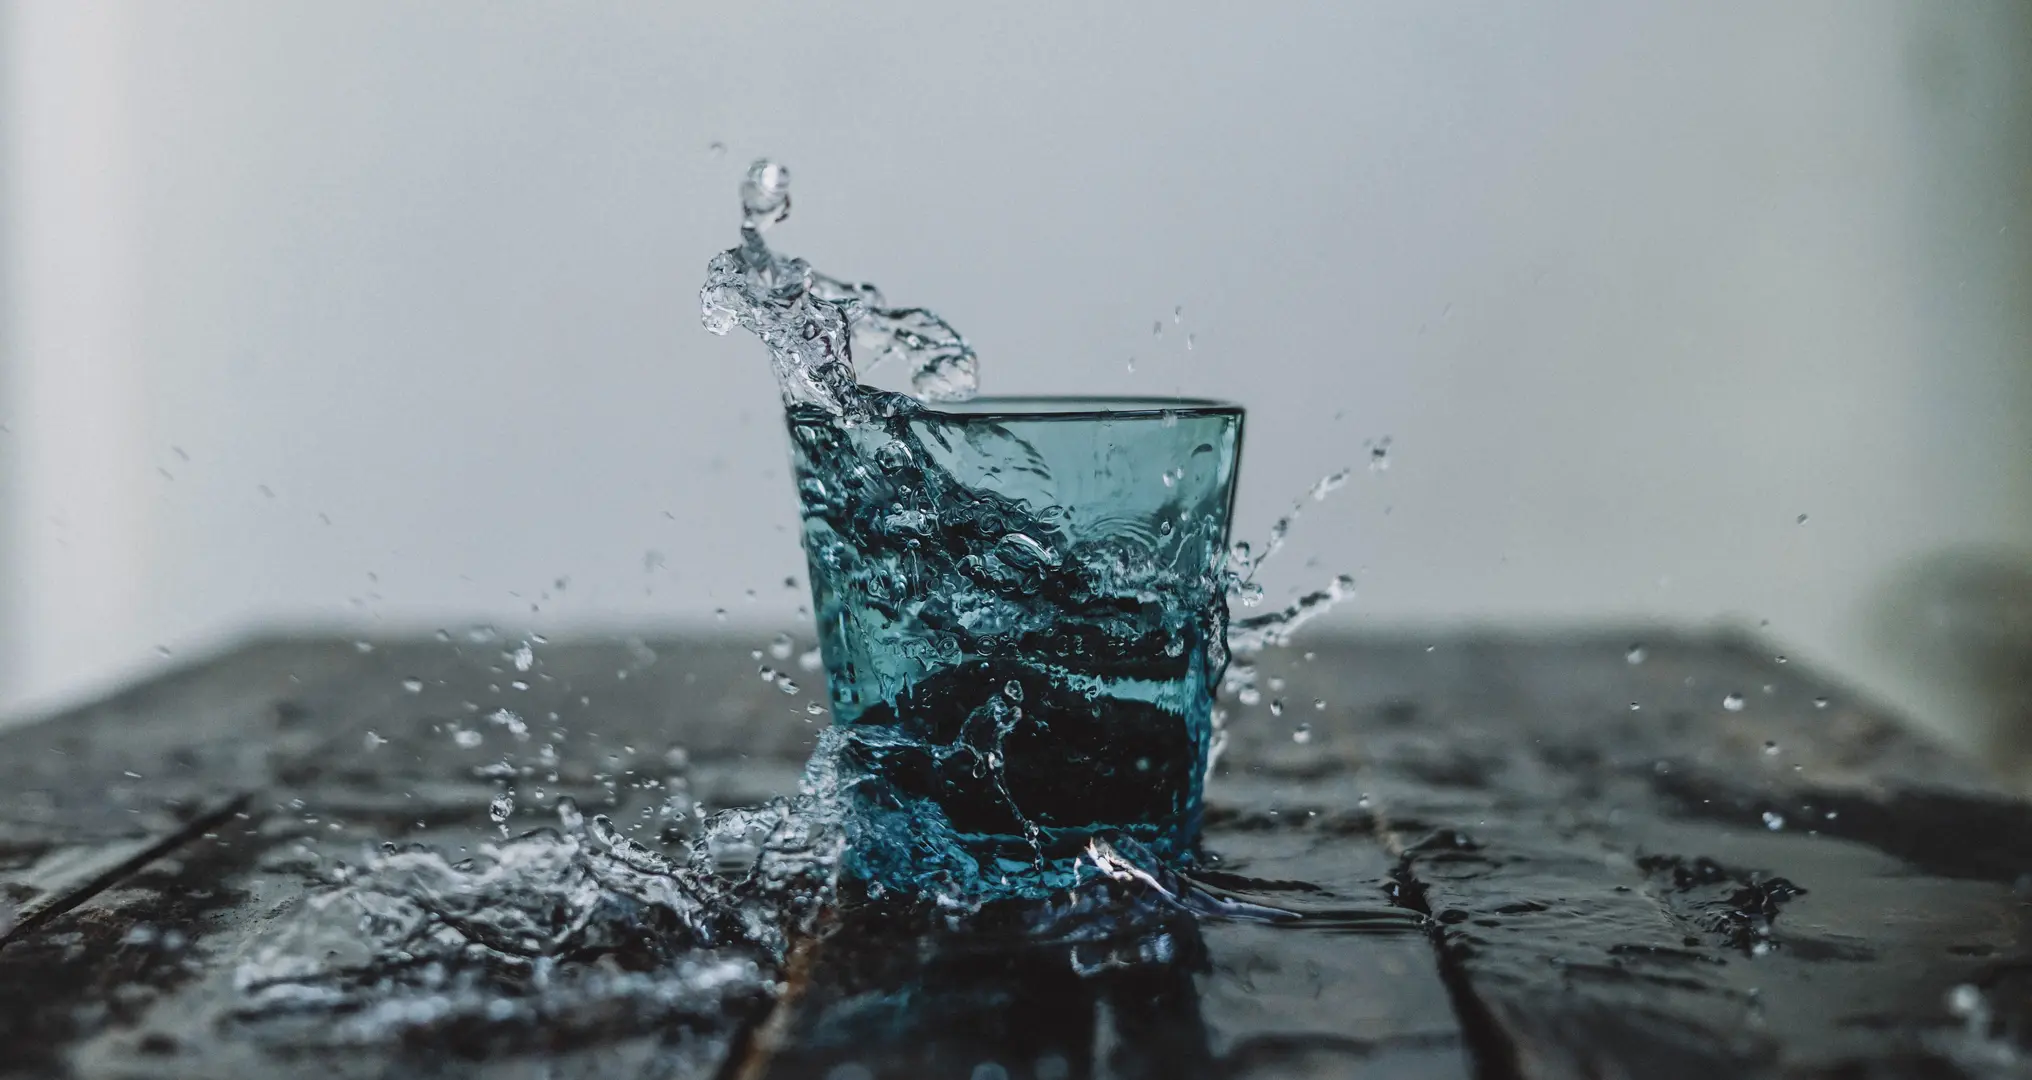 Water splashing in a glass